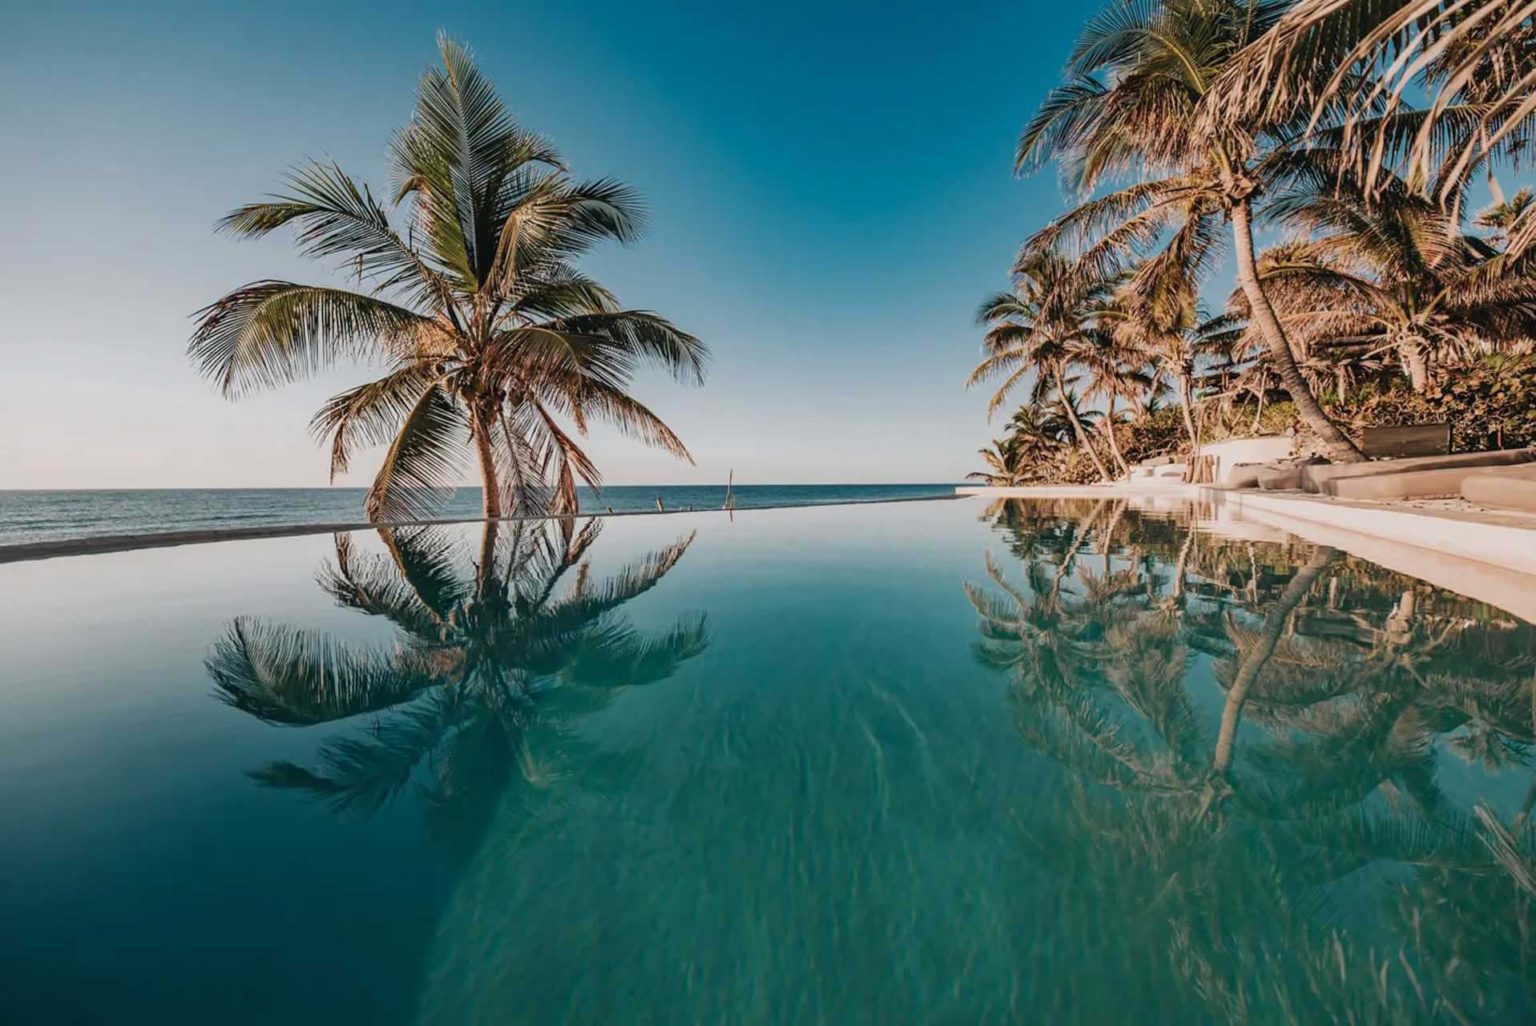 Infinity pool overlooking the ocean at the Papaya Playa Project